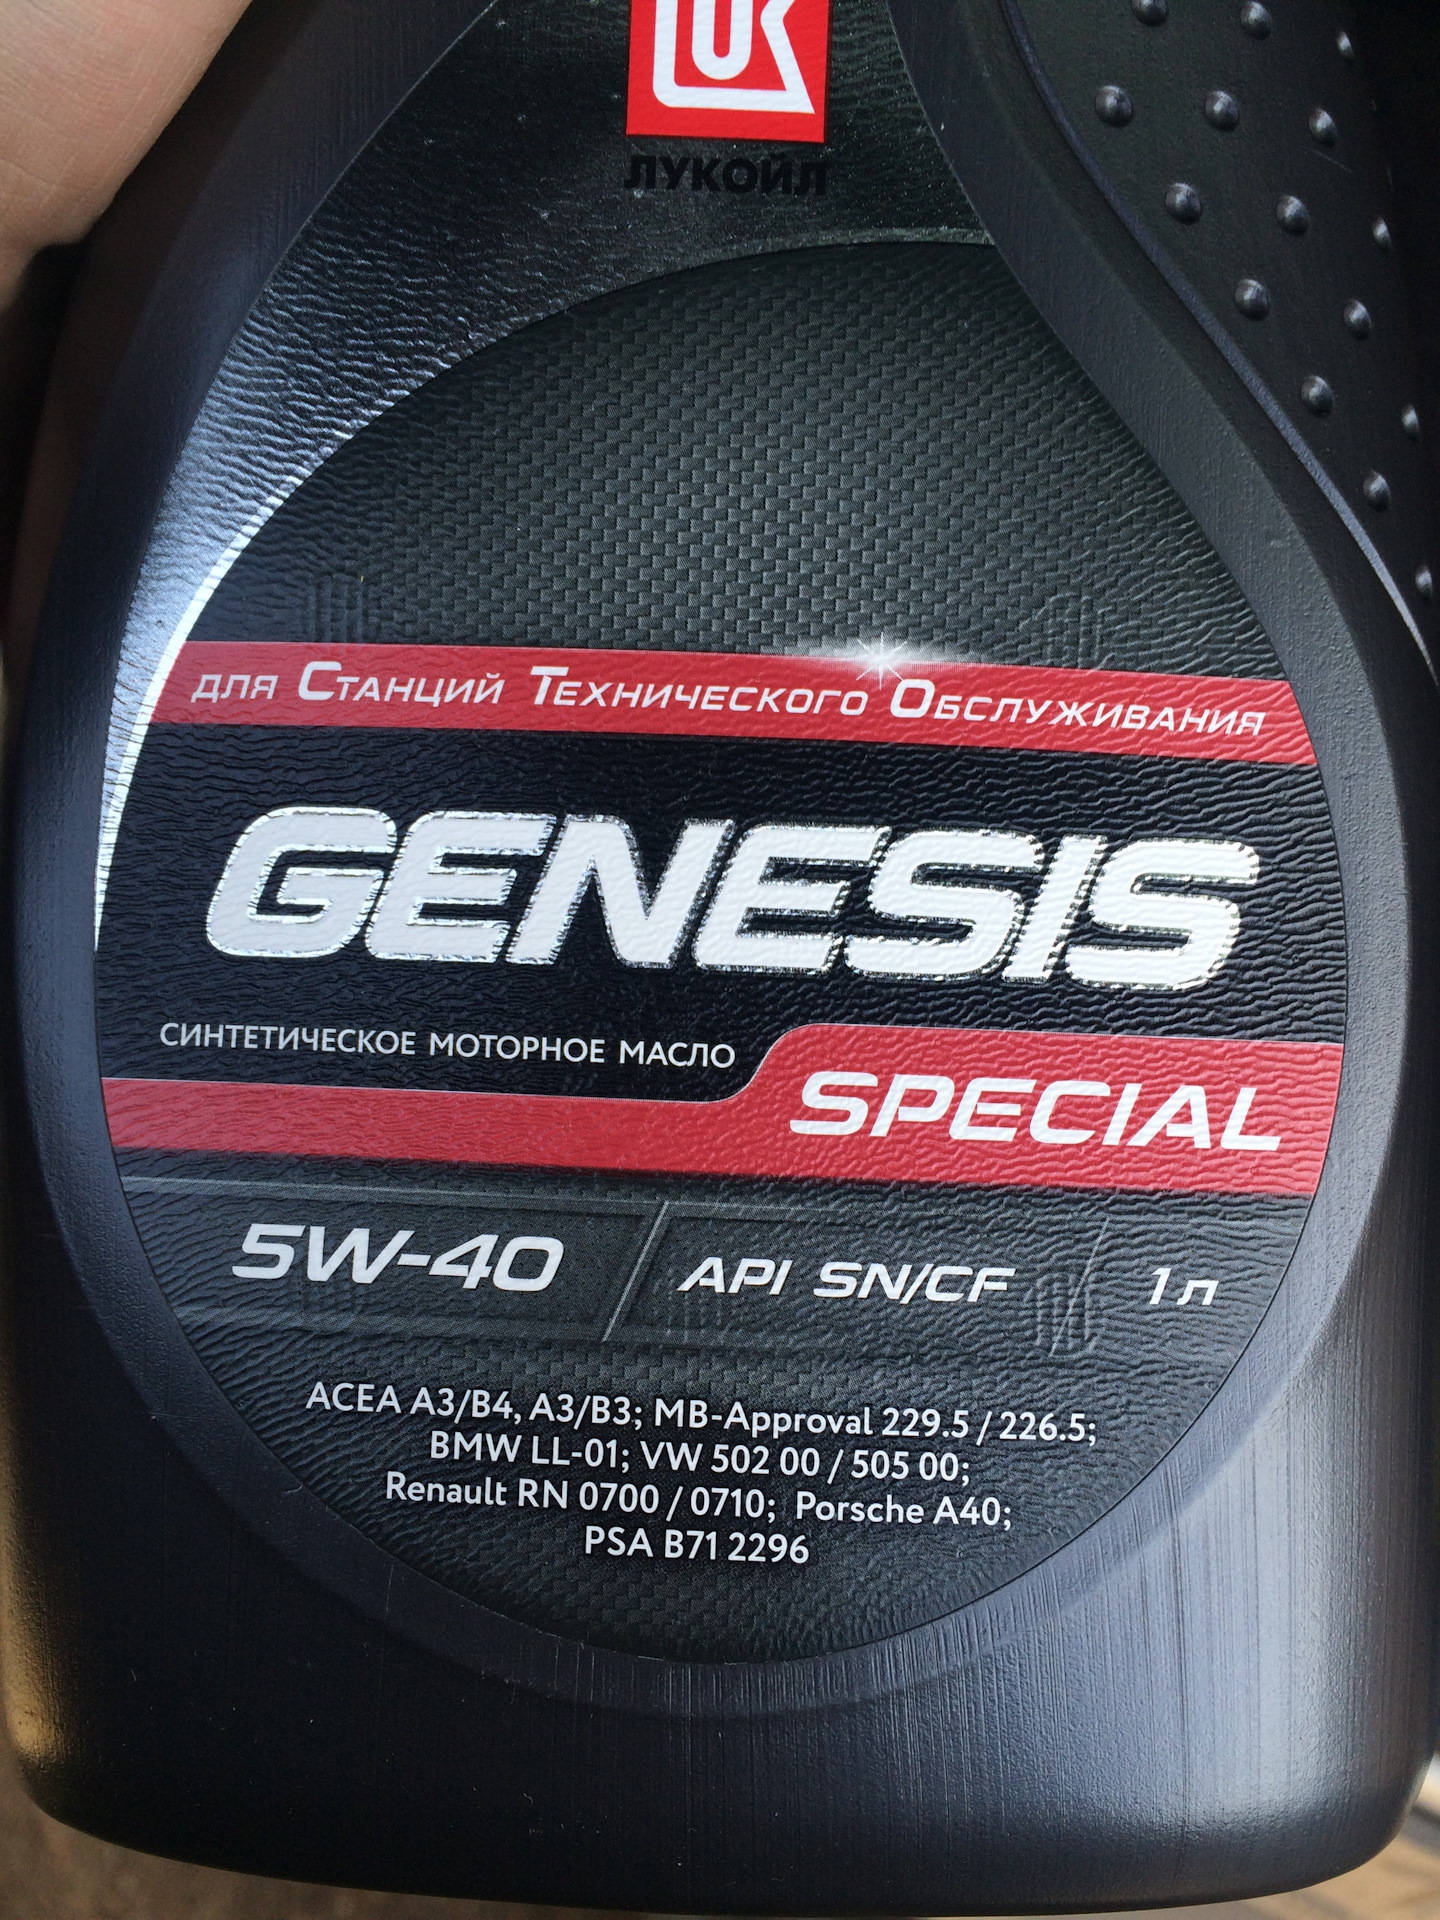 Лукойл армотек отзывы. Genesis 5w40. Genesis Special 5w-40. Лукойл Генезис 5w40 Special. Lukoil Genesis Special 5w-40.